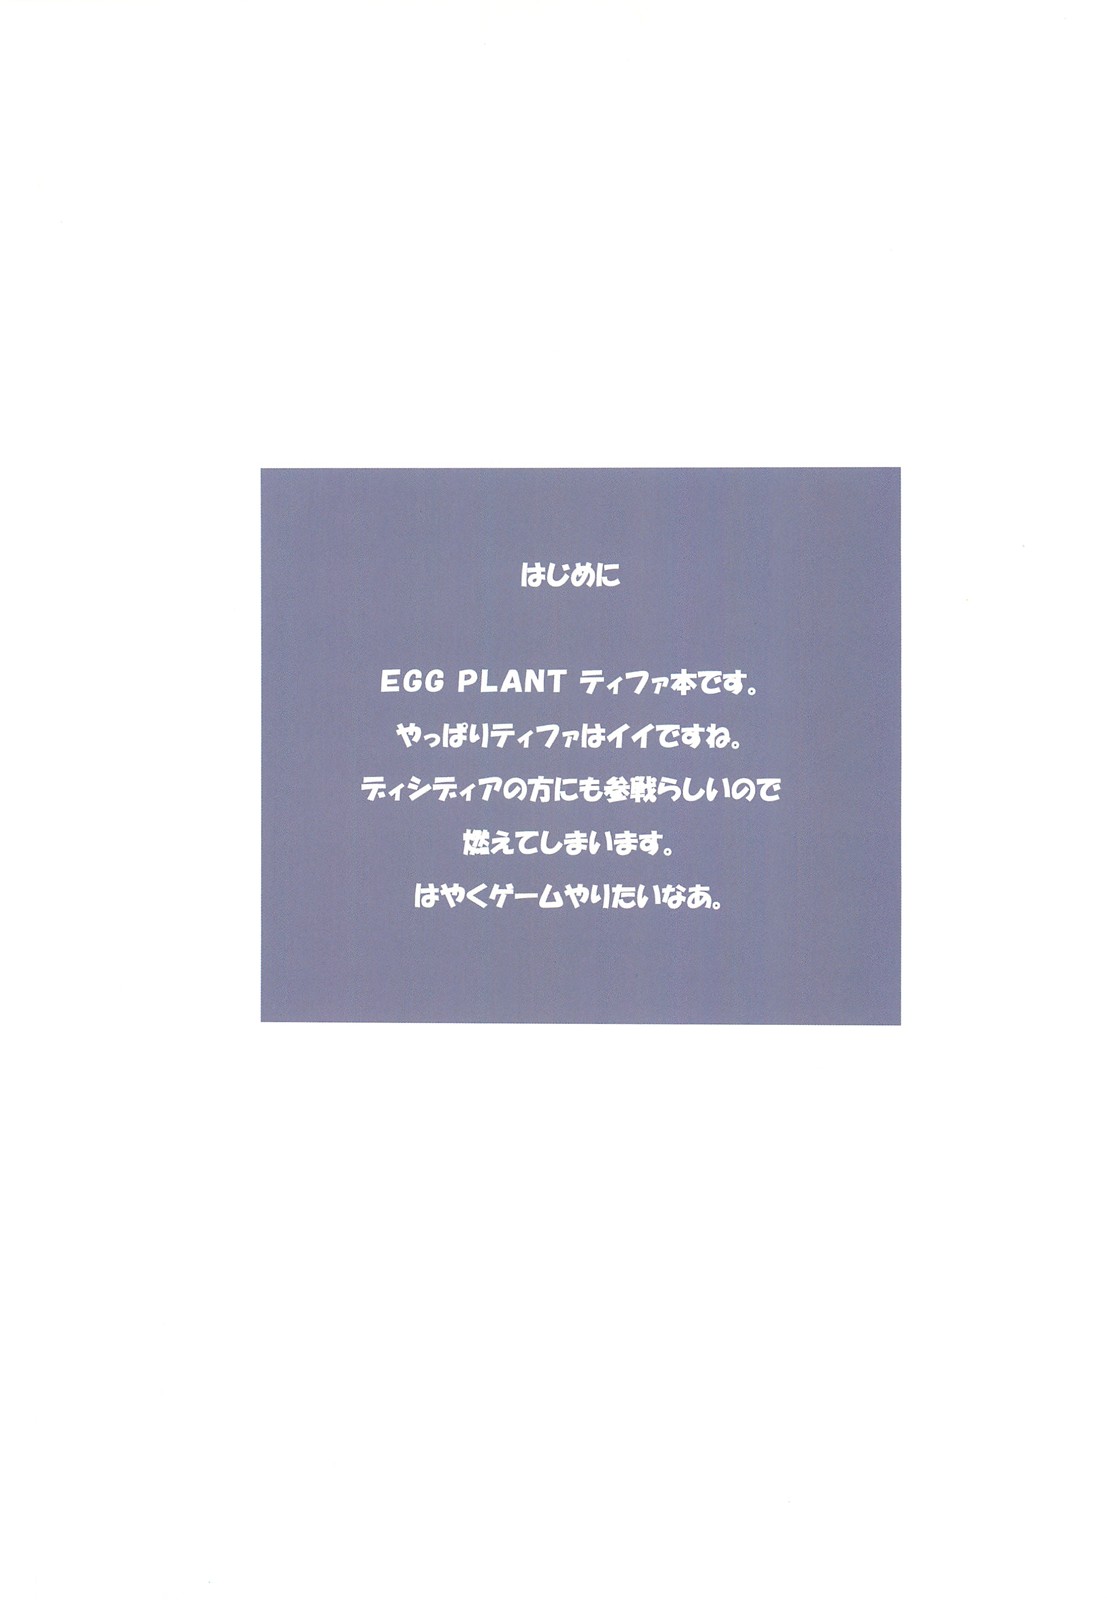 (C79) [NAS-ON-CH (NAS-O)] EGG PLANT FFVII (Final Fantasy VII) (English) =Little White Butterflies= (C79) [NAS-ON-CH (NAS-O)] EGG PLANT FFVII (ファイナルファンタジー VII) [英訳]